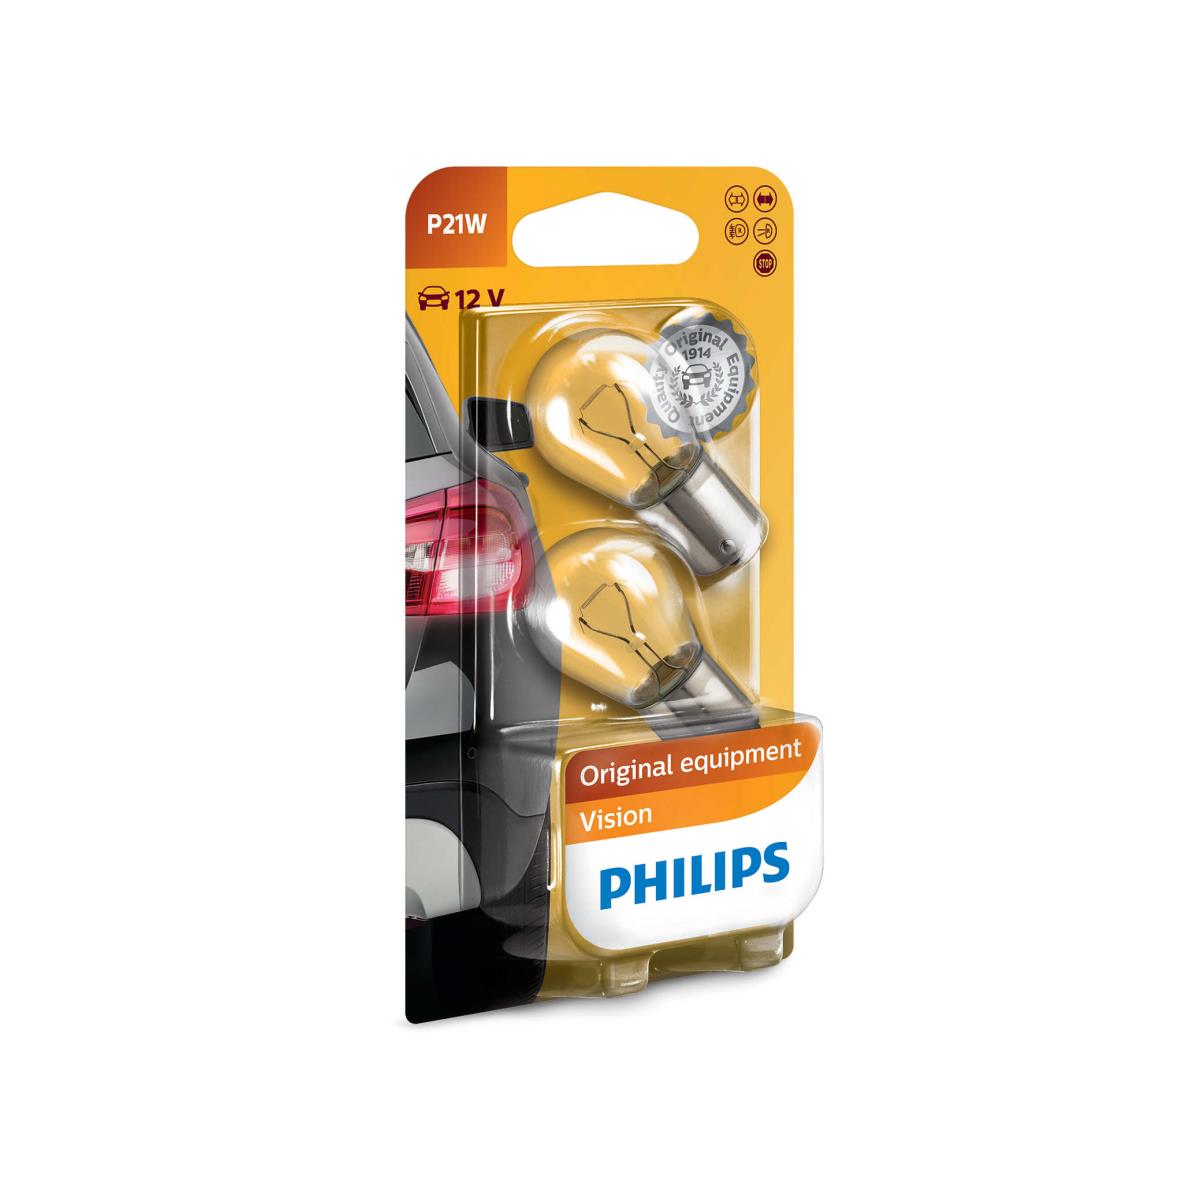 Philips Set Lampen 2 Stück P21W 12V 21W BA15s Vision Blister